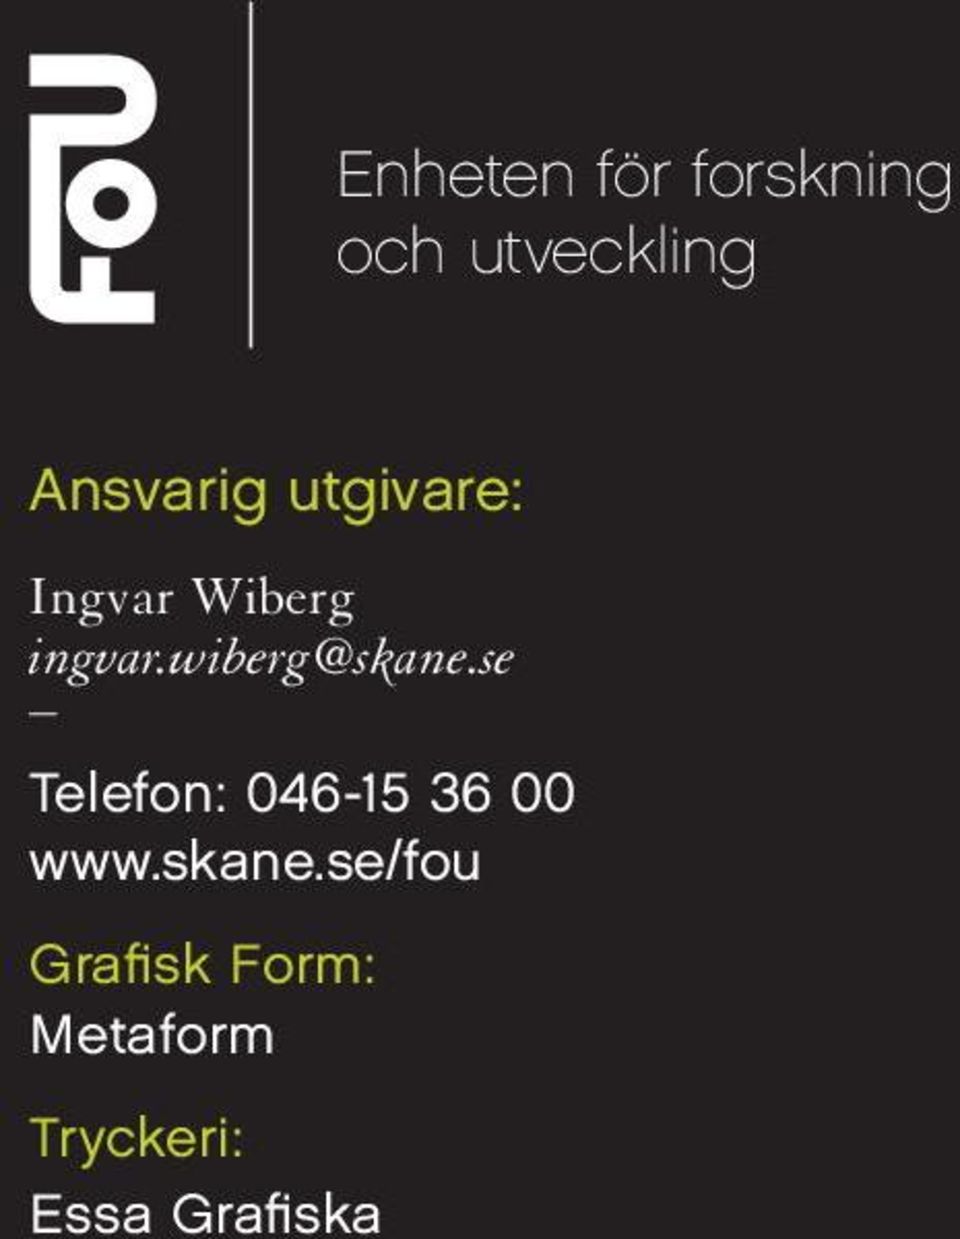 wiberg@skane.se Telefon: 046-15 36 00 www.